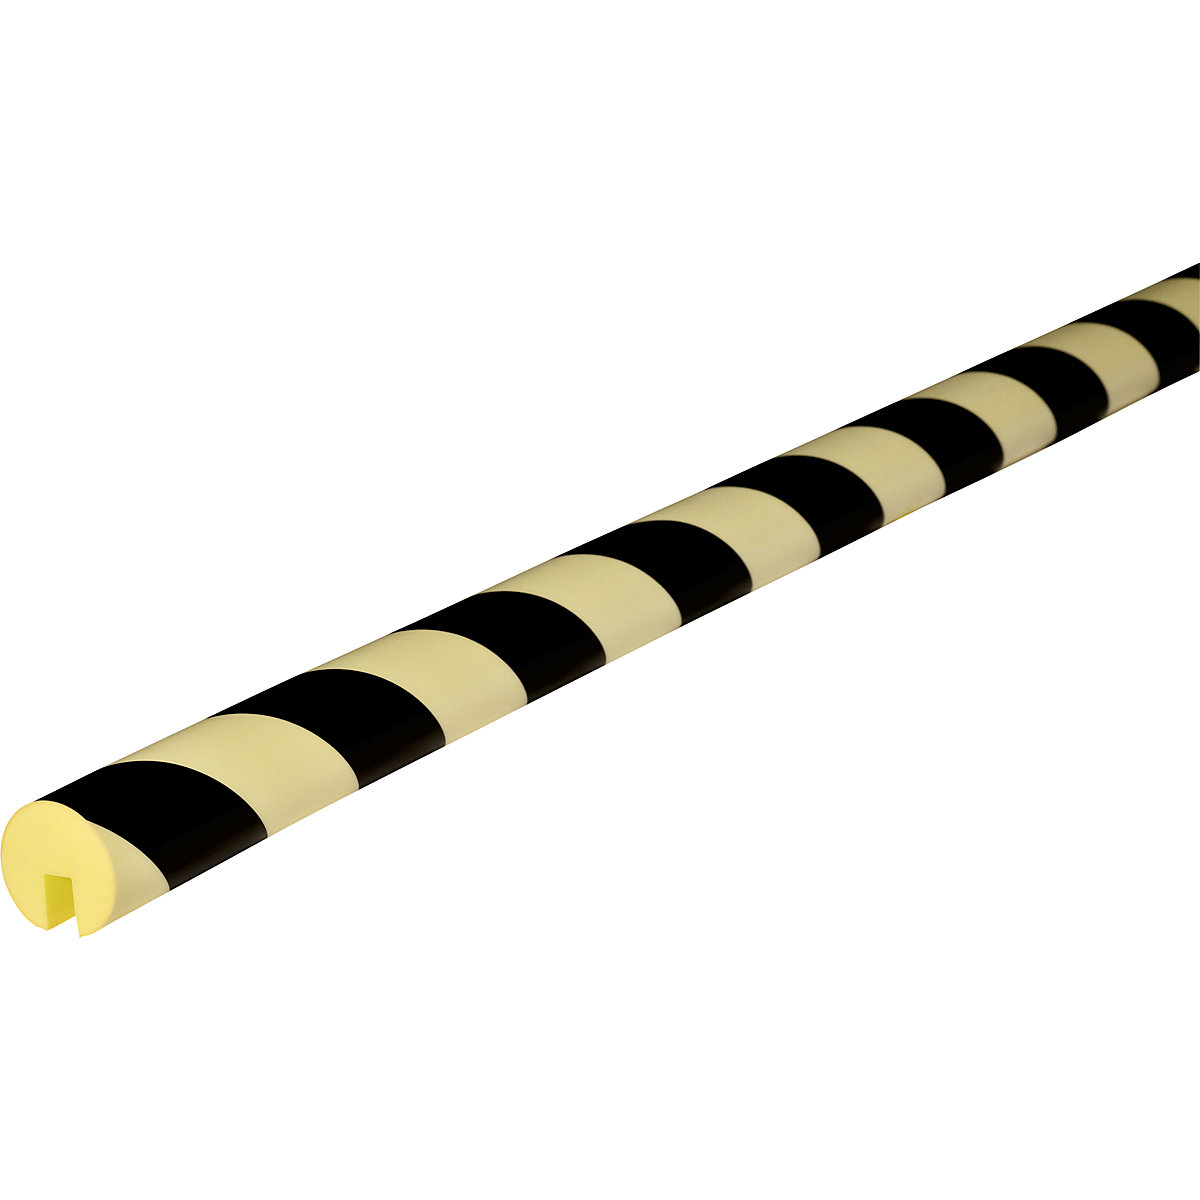 Knuffi® edge protection – SHG, type B, 1 m piece, black / long-lasting fluorescent-19